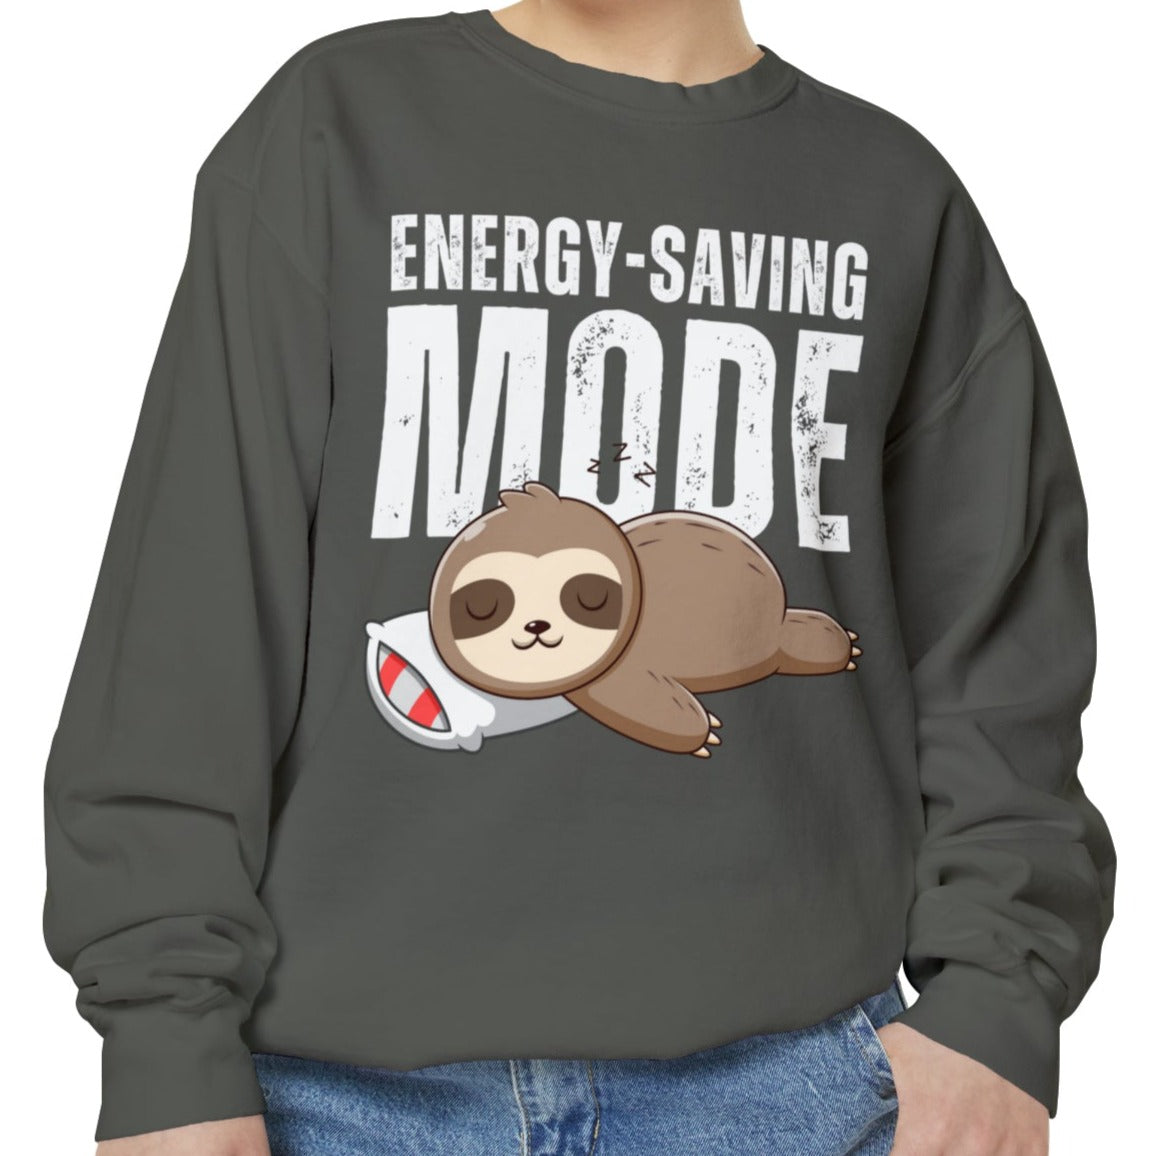 Women's Comfort Colors Sweatshirt with Energy-Saving Mode - Stay Cozy - Eddy and Rita